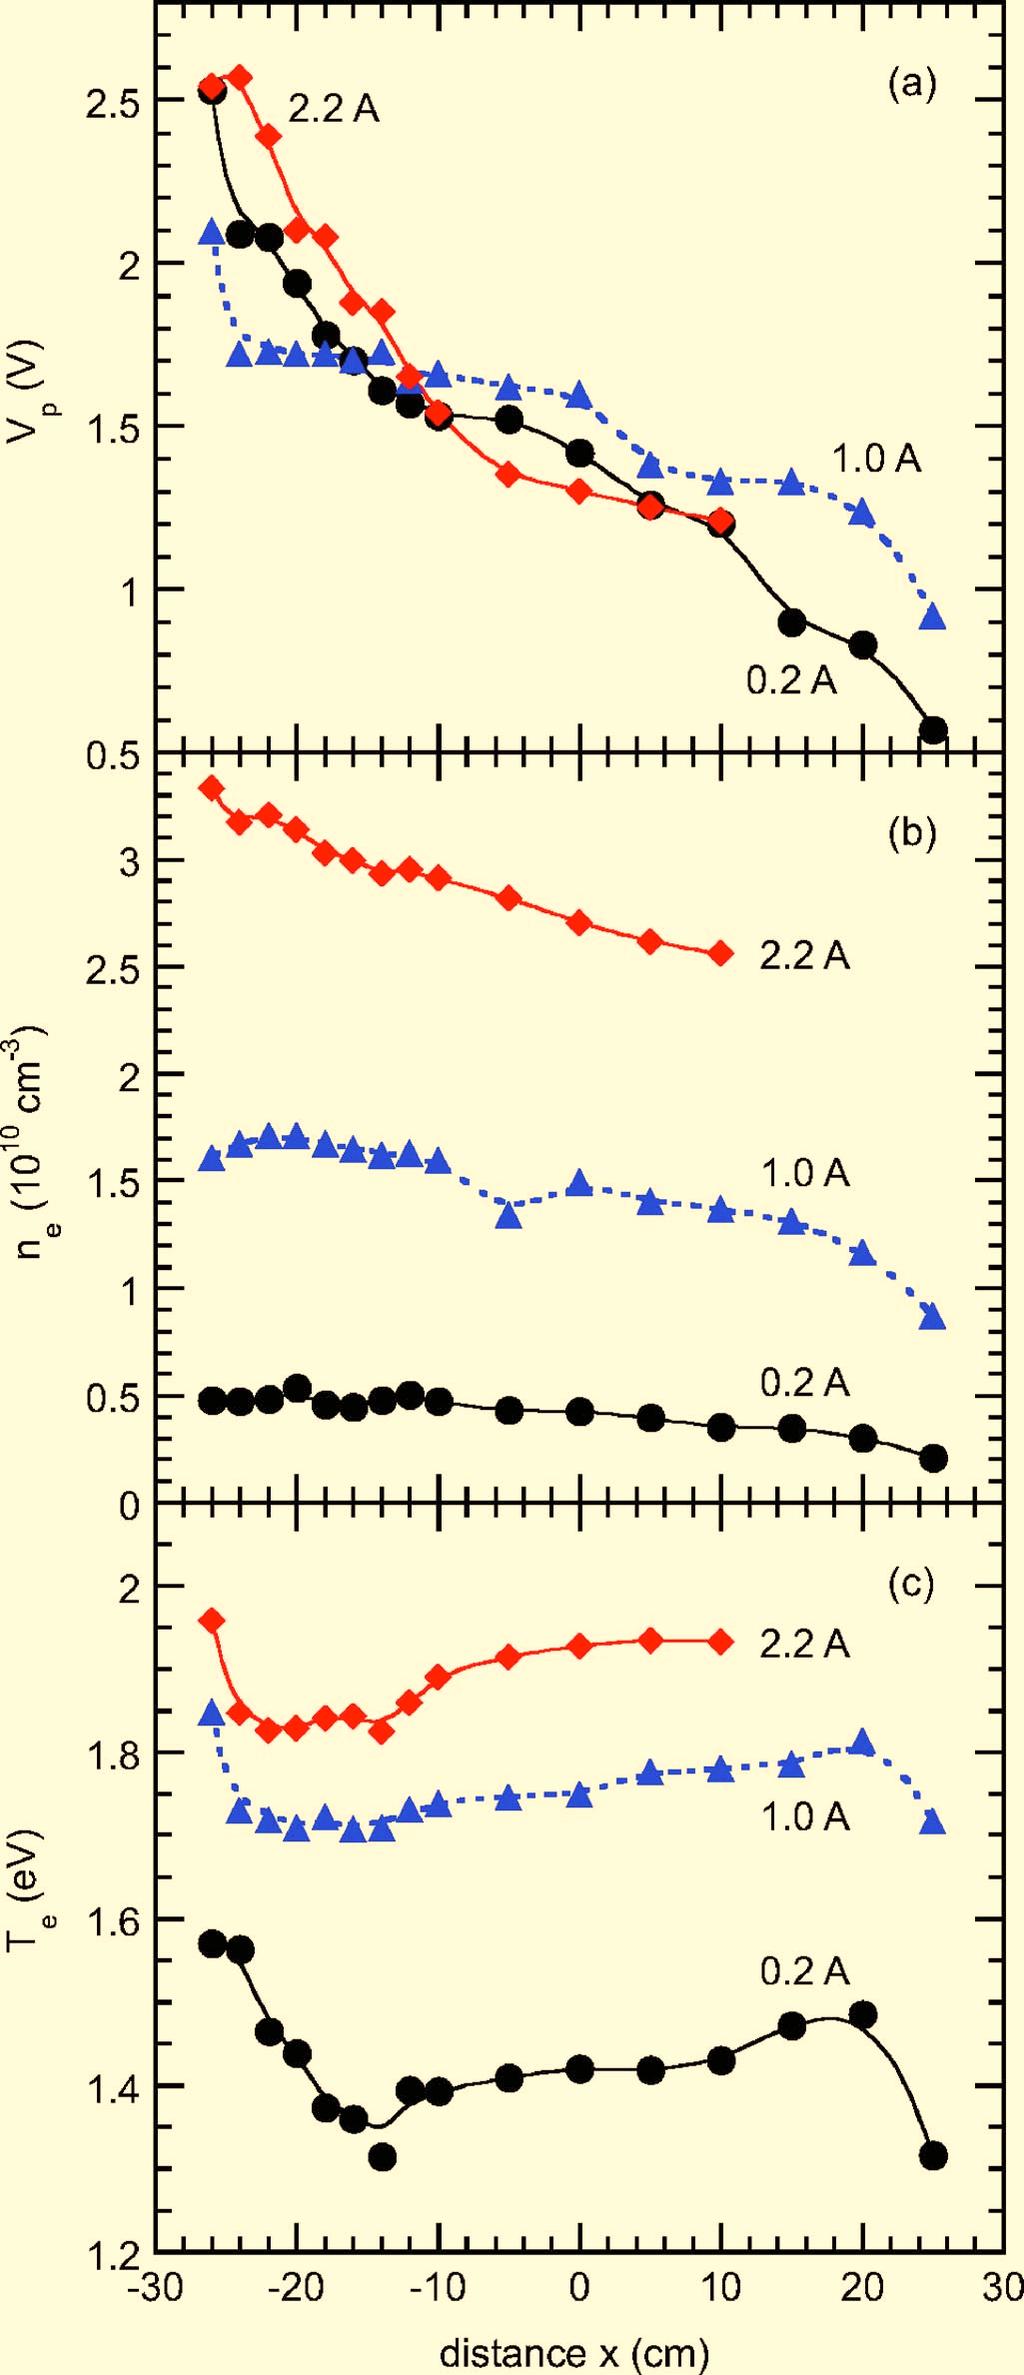 103702-3 Measurement of the ion drag force Phys. Plasmas 14, 103702 20